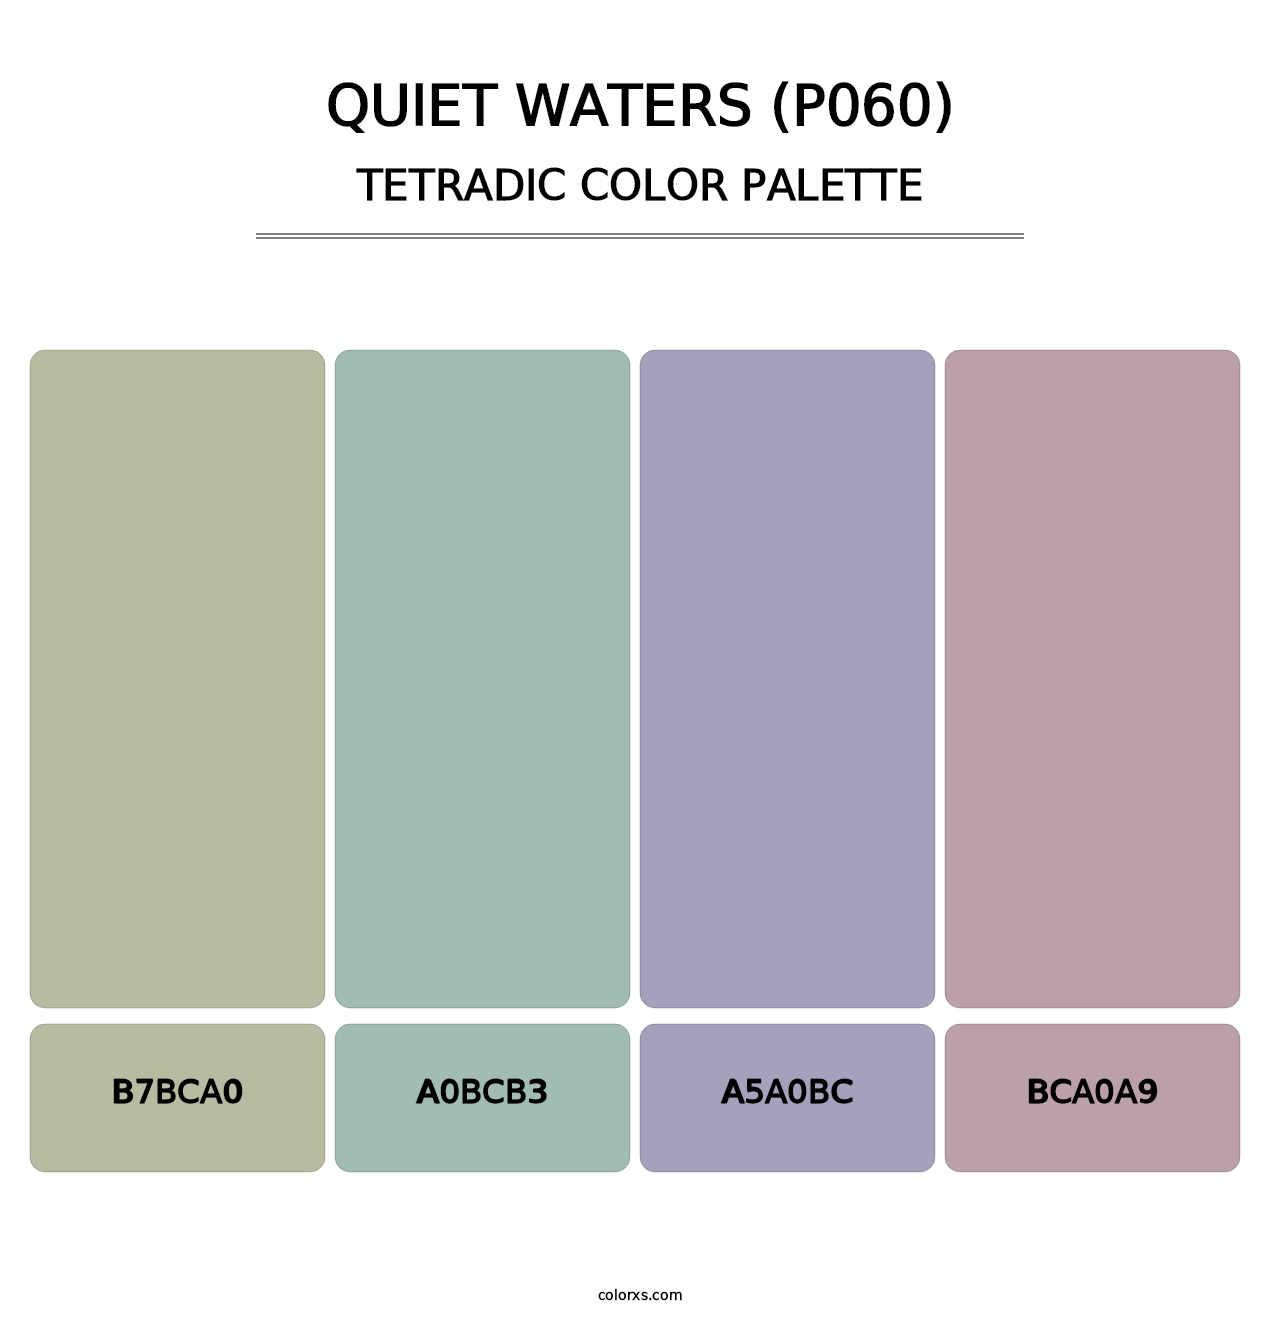 Quiet Waters (P060) - Tetradic Color Palette